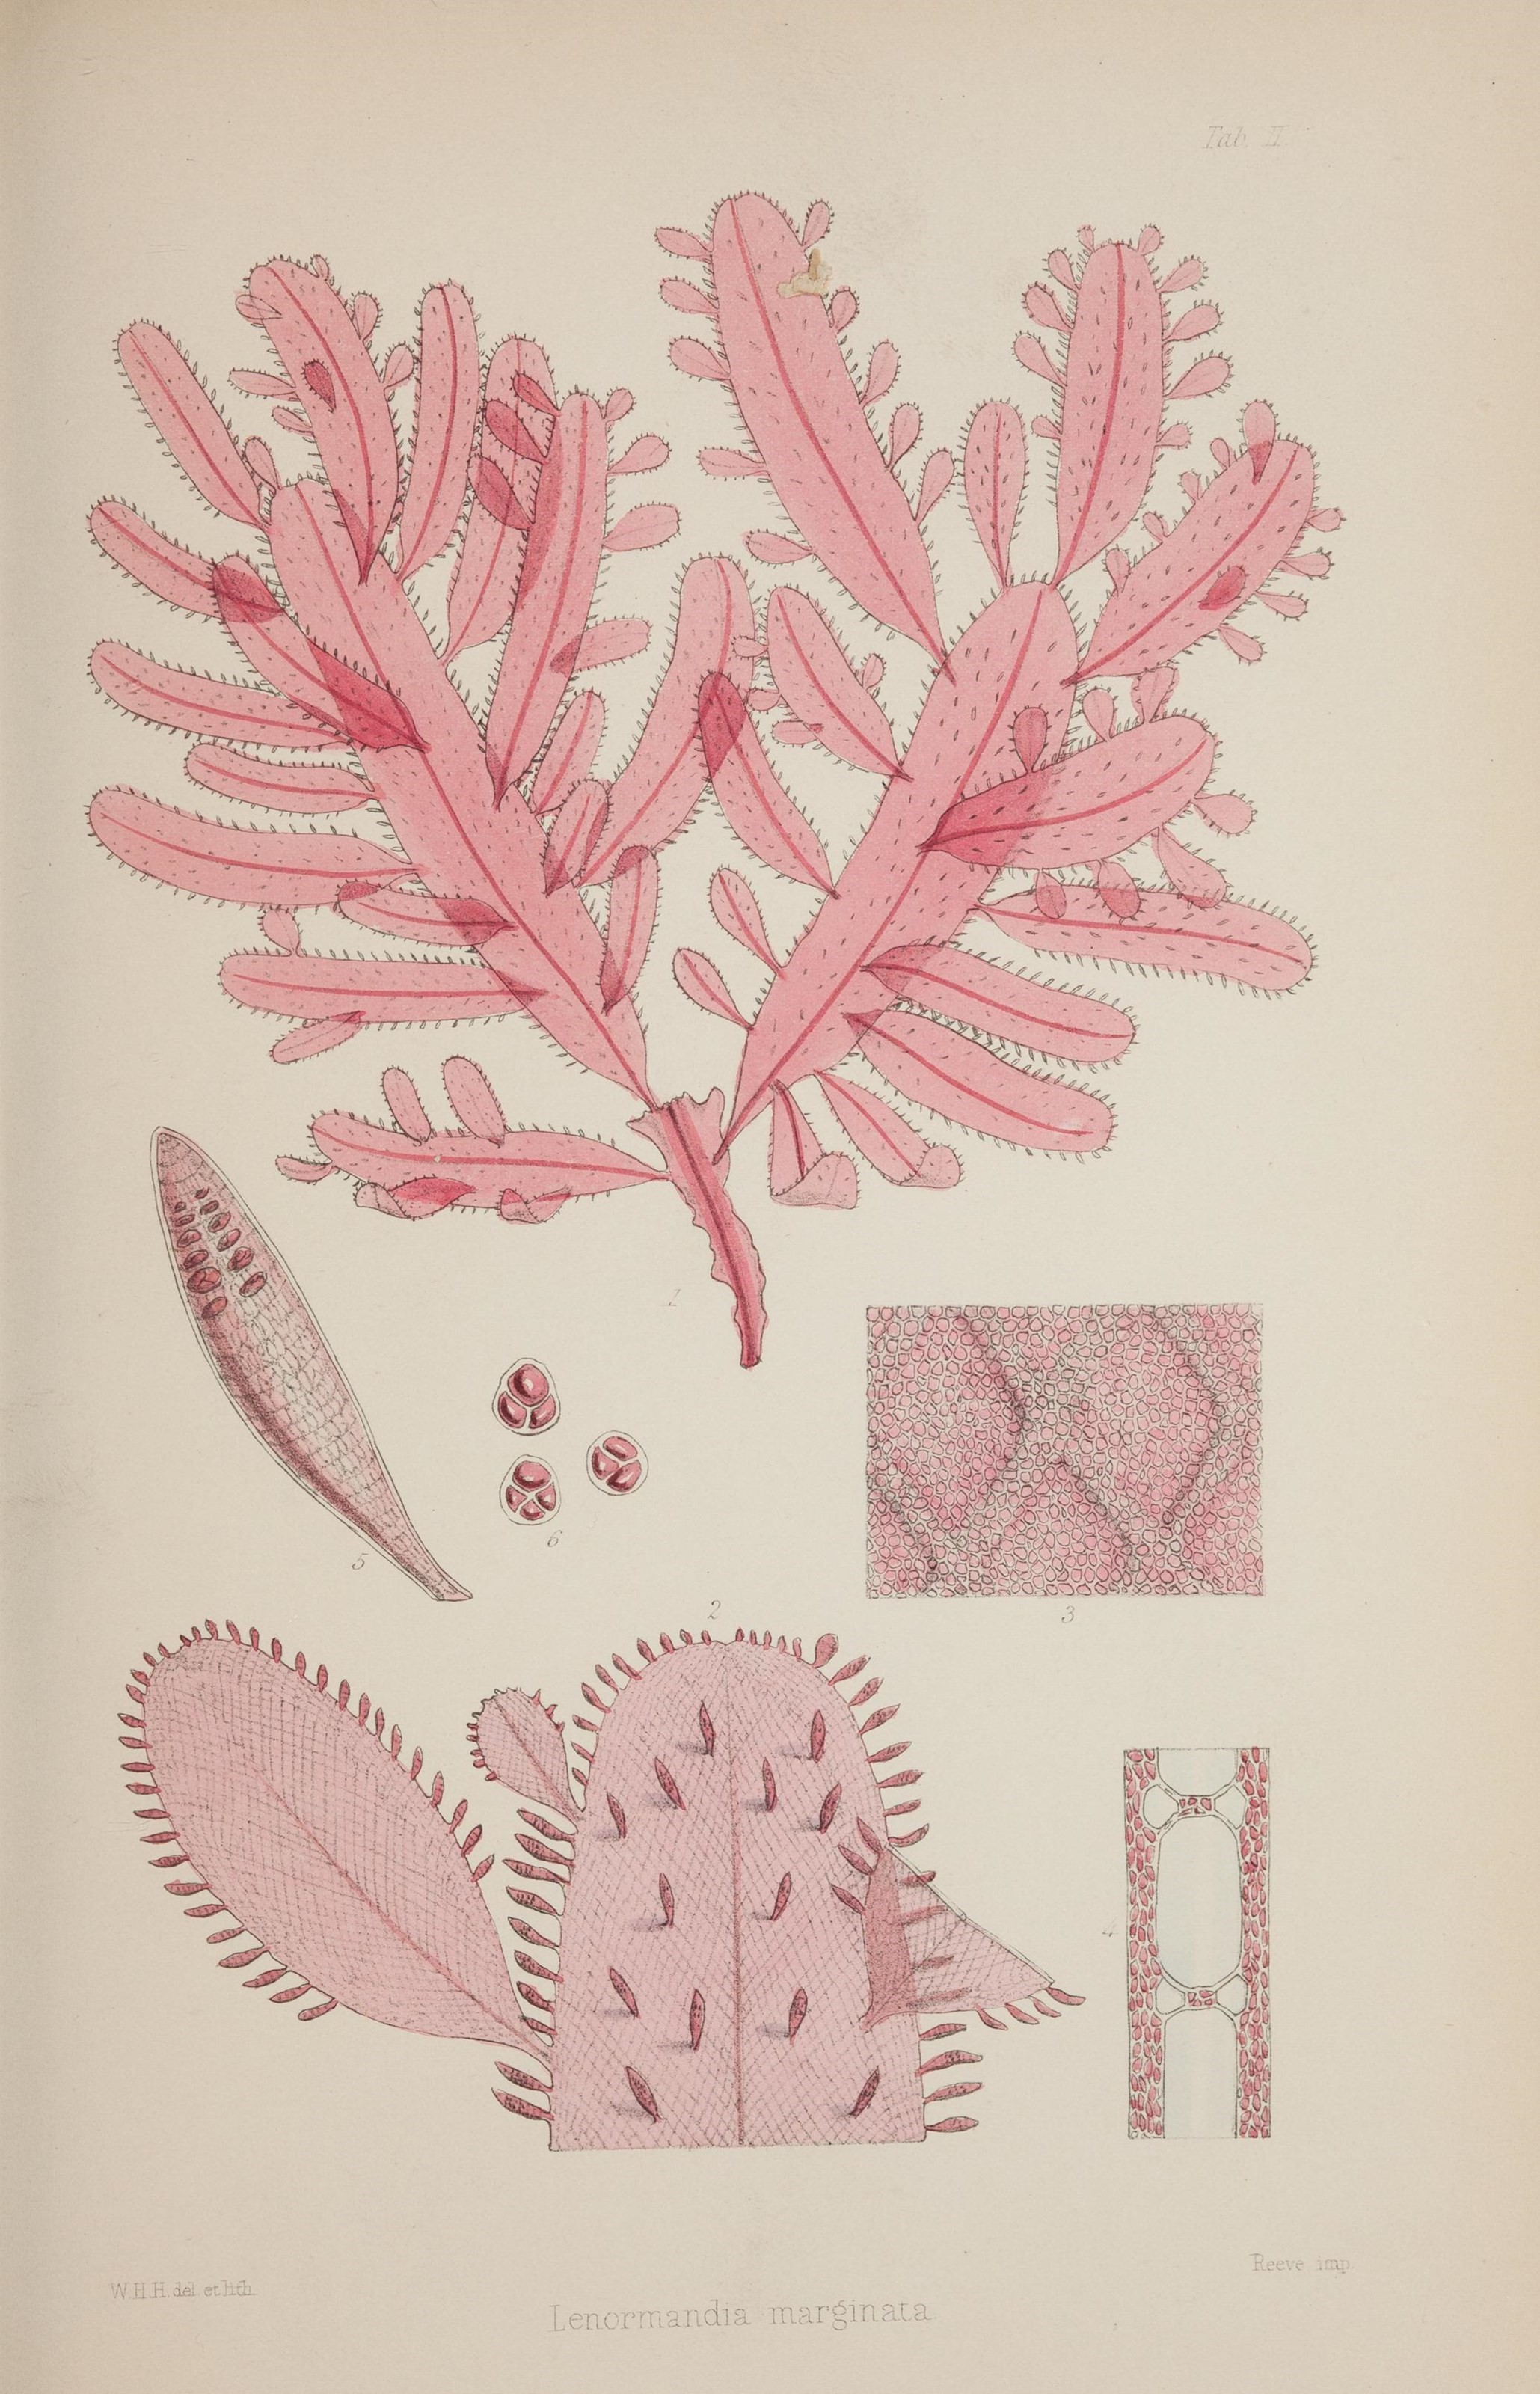 Nereis australis, or Algae of the southern ocean (17832233291)